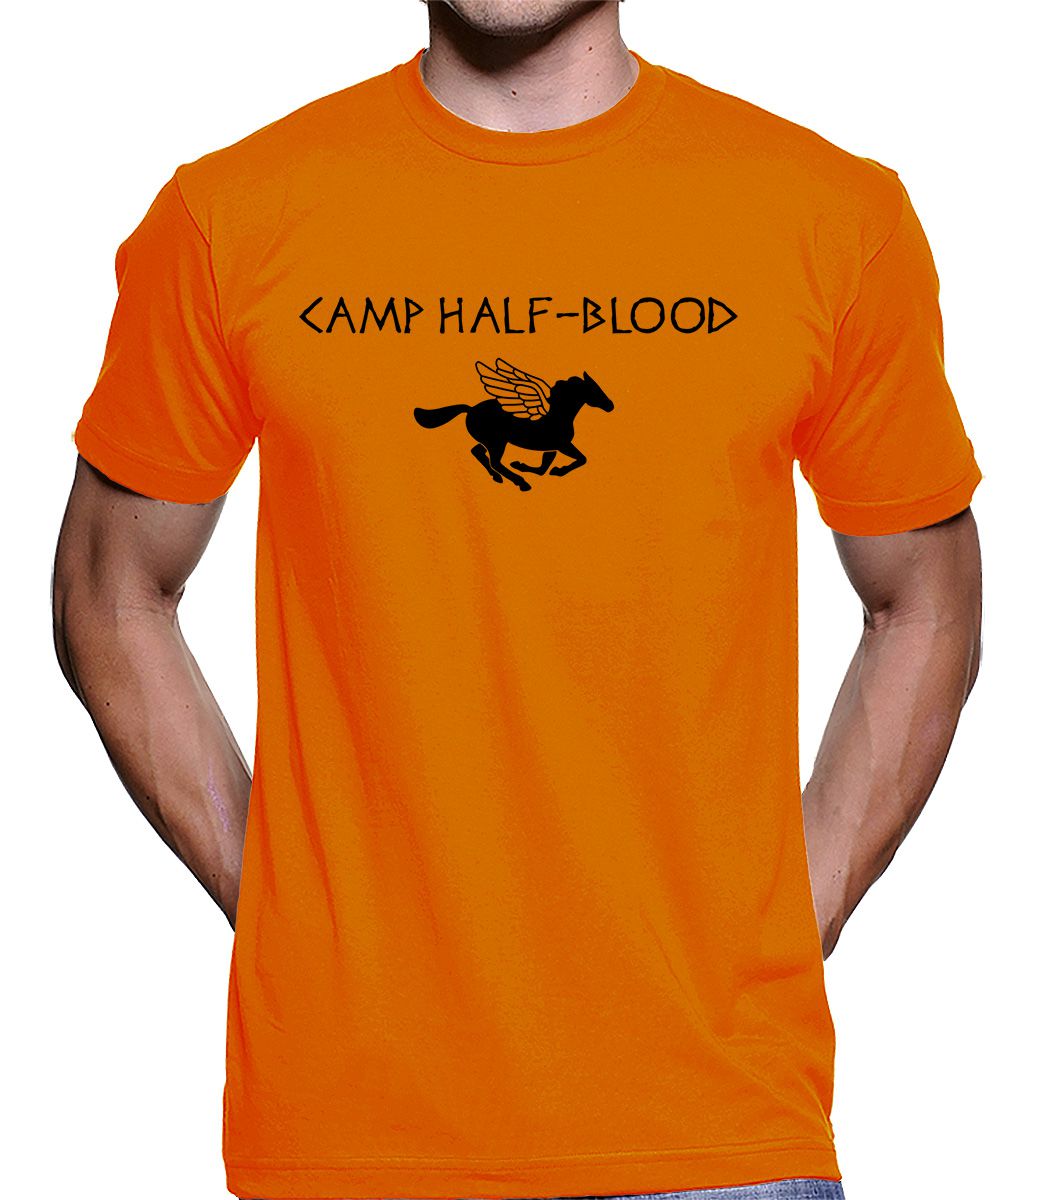 Camiseta Masculina Roxa Percy Jackson Logo Camp Jupter - Loja Kaluma │  Camisetas Nerds, Geeks e Cultura Pop